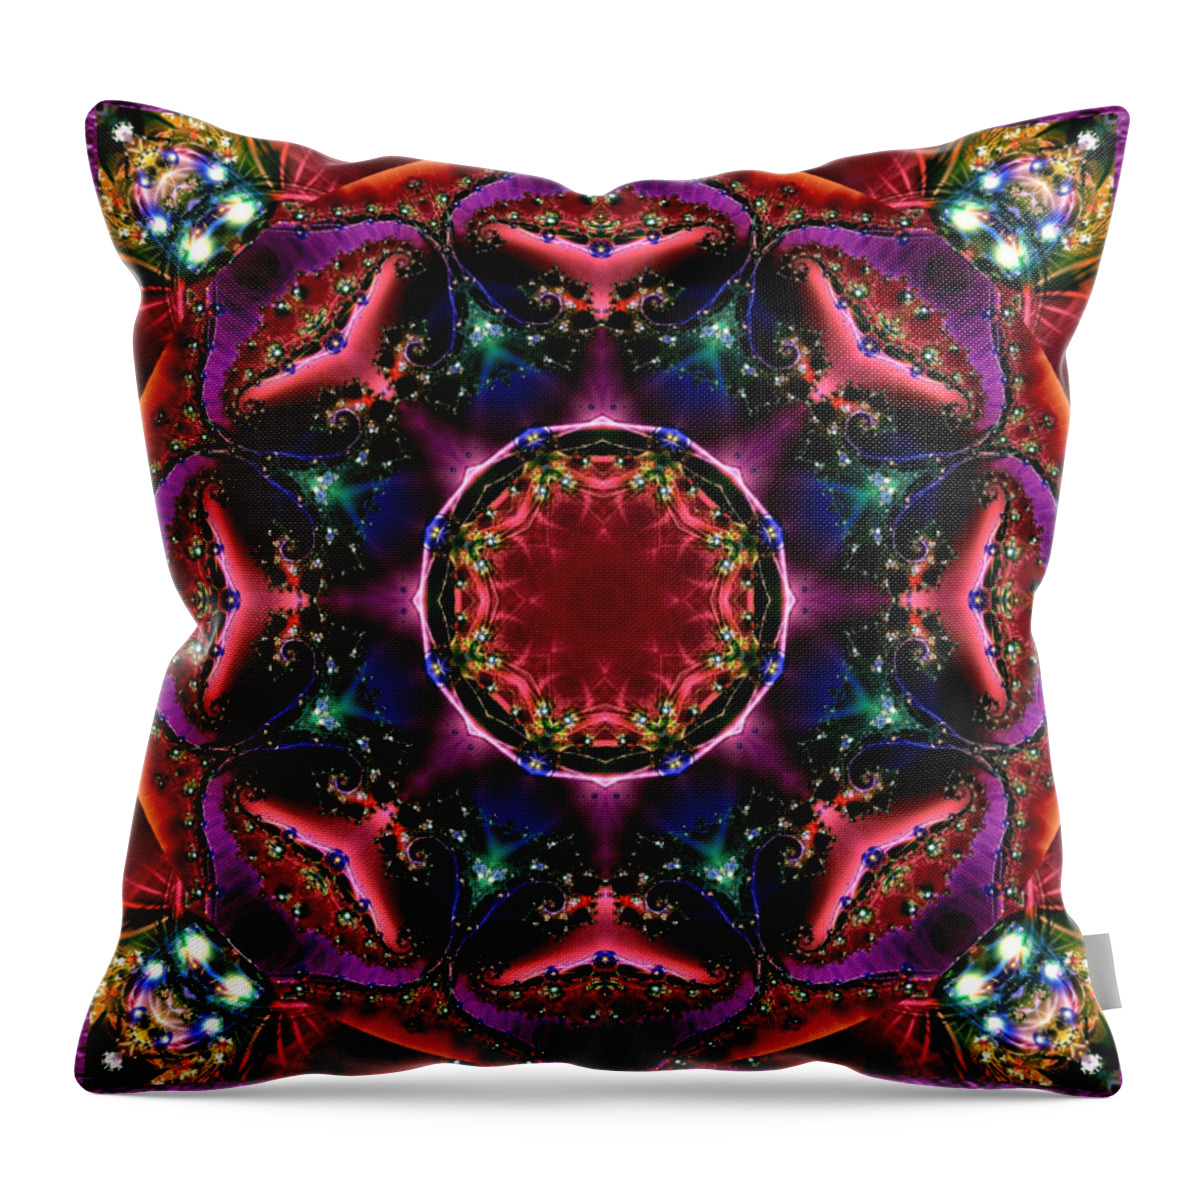 Kaleidoscope Throw Pillow featuring the digital art Bejewelled Mandala No 3 by Charmaine Zoe